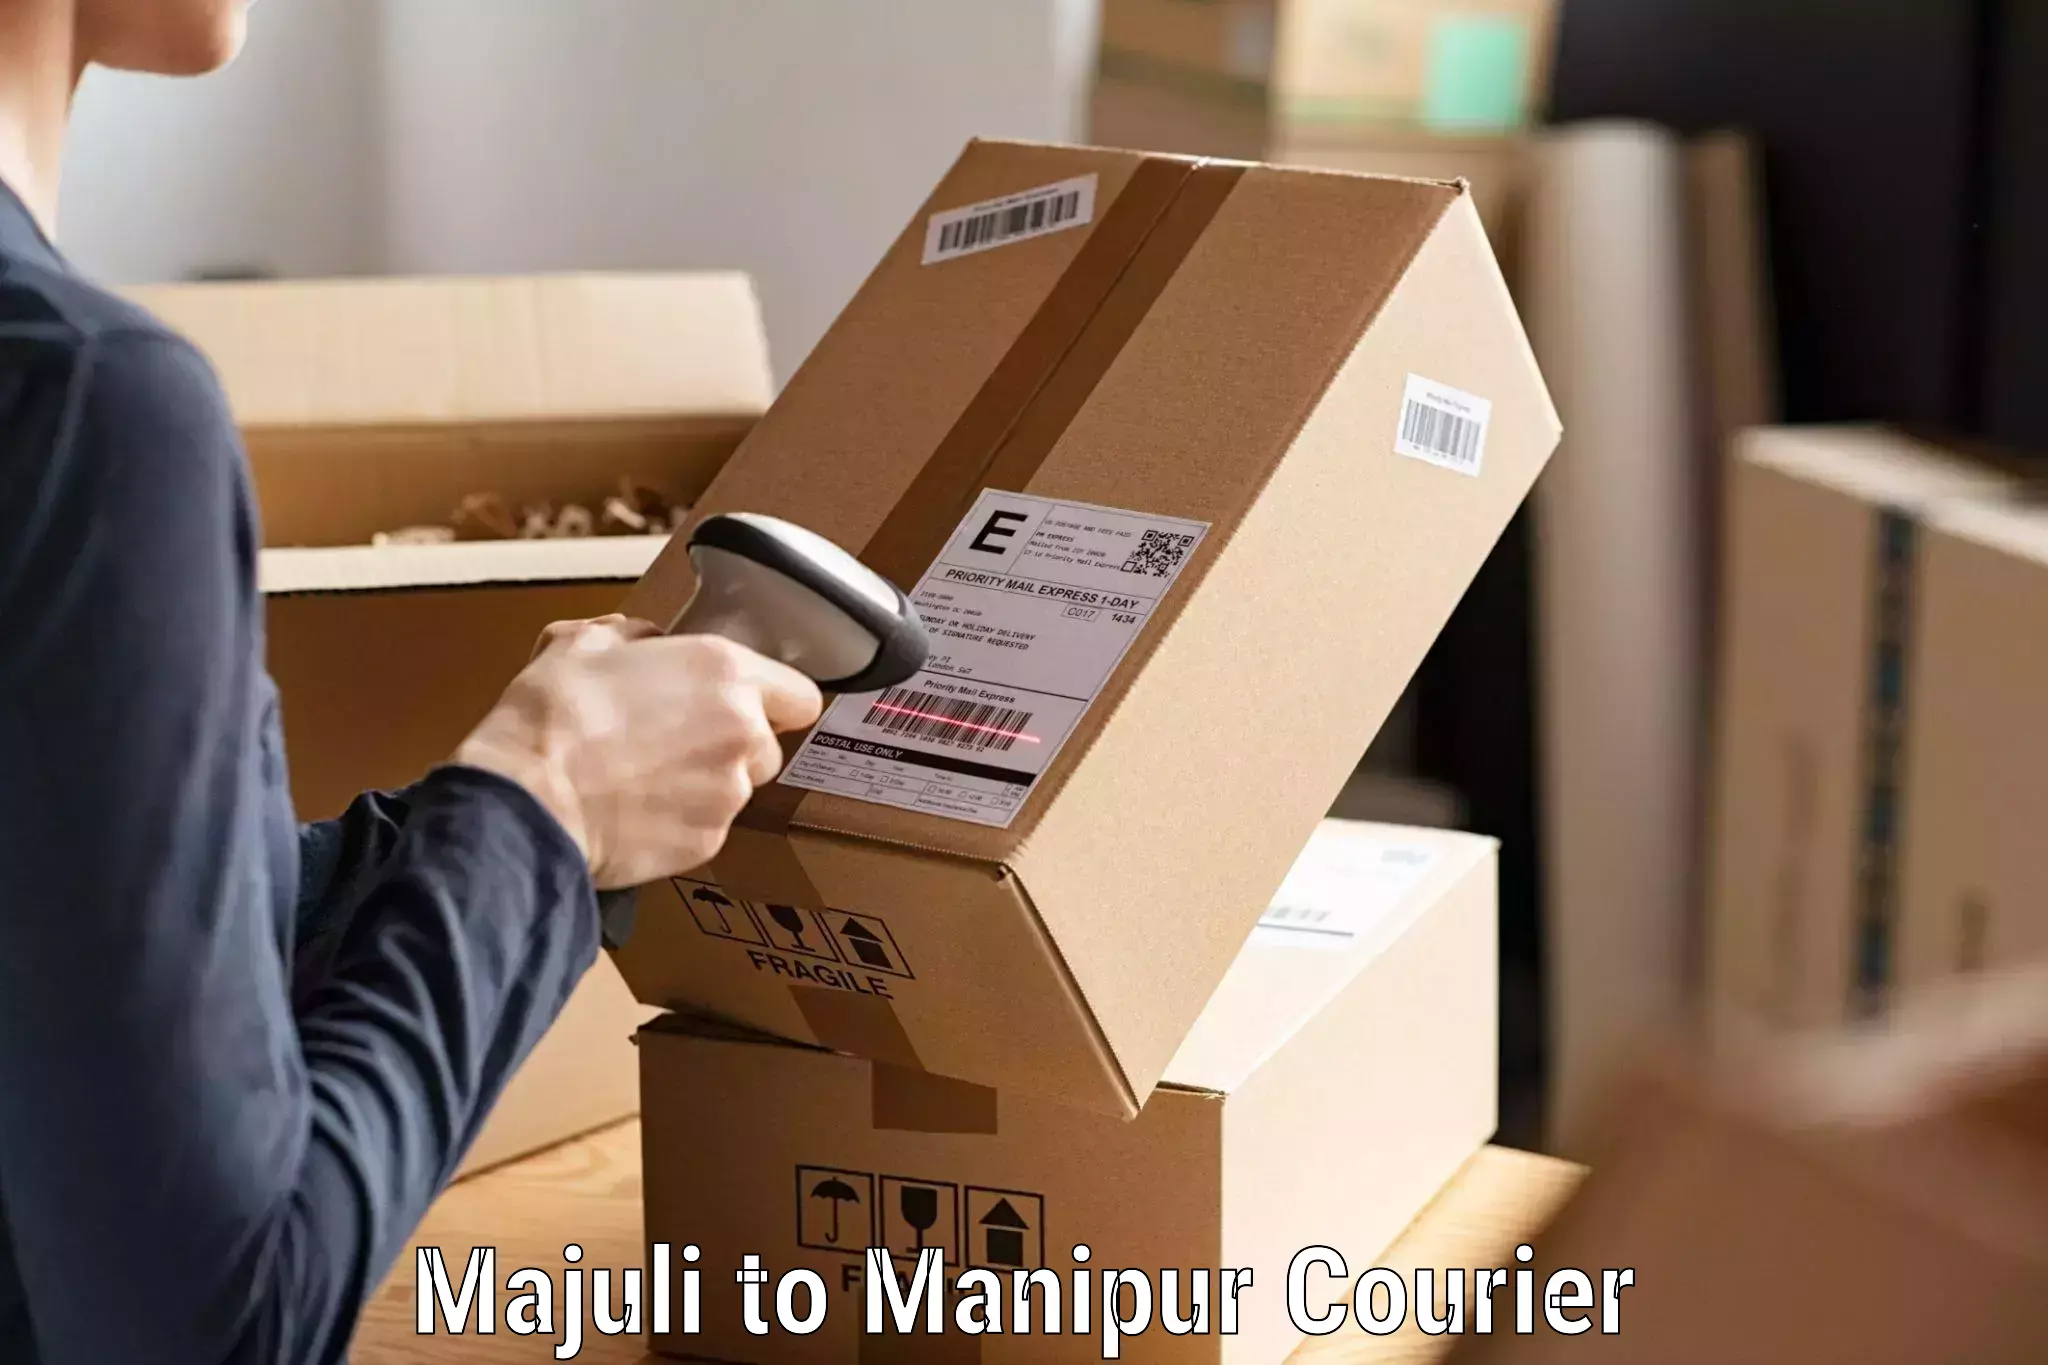 Courier service comparison Majuli to Thoubal